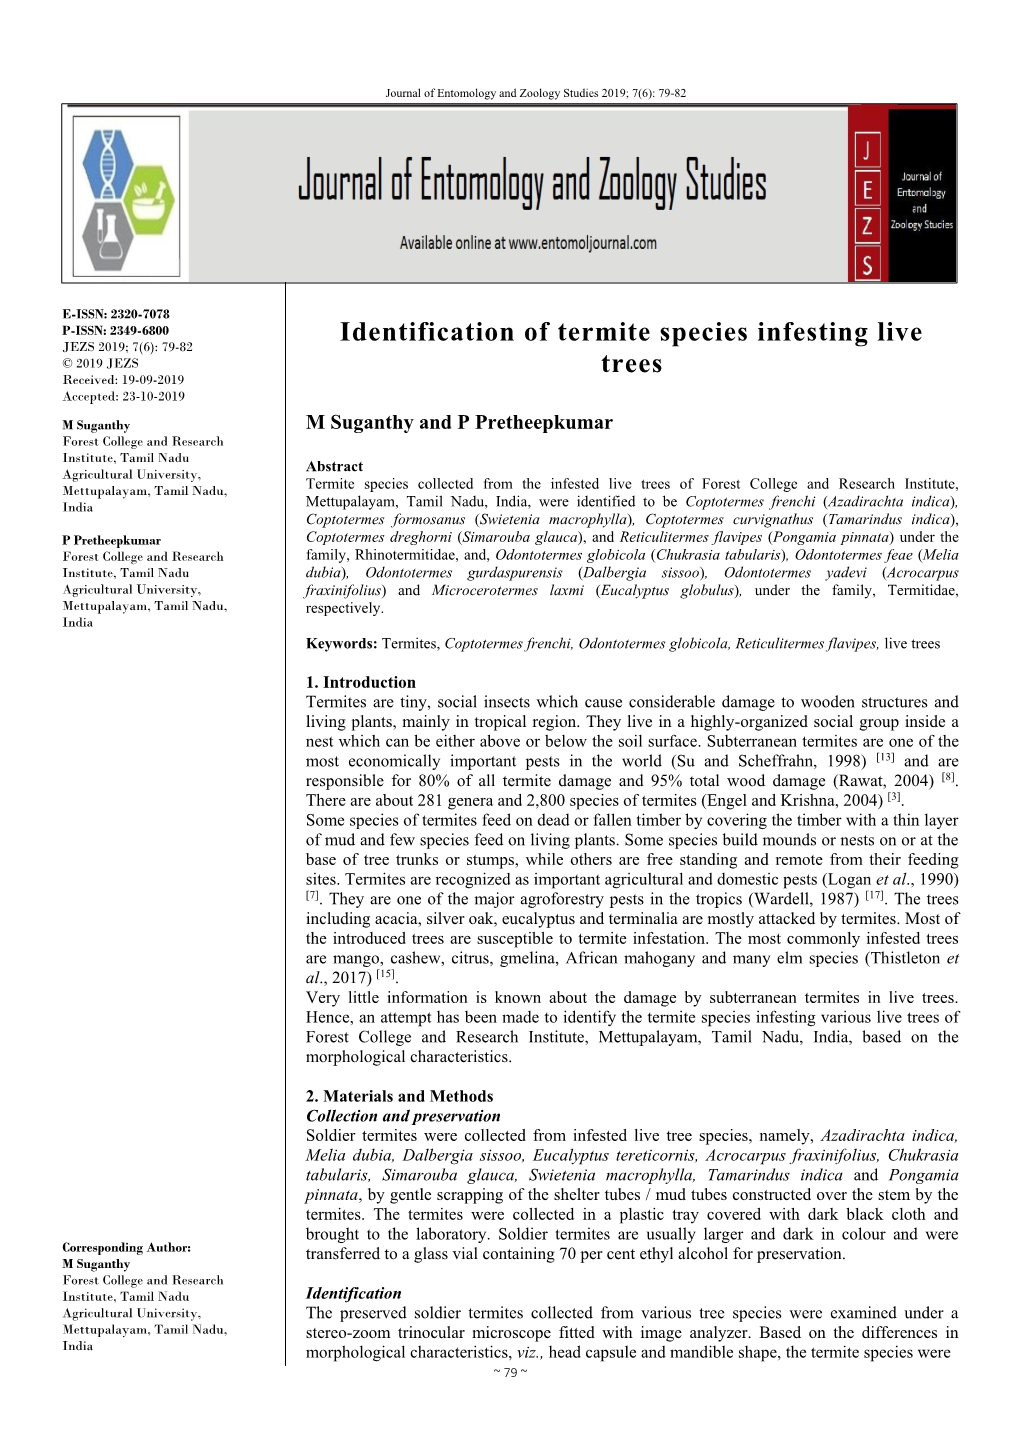 Identification of Termite Species Infesting Live Trees